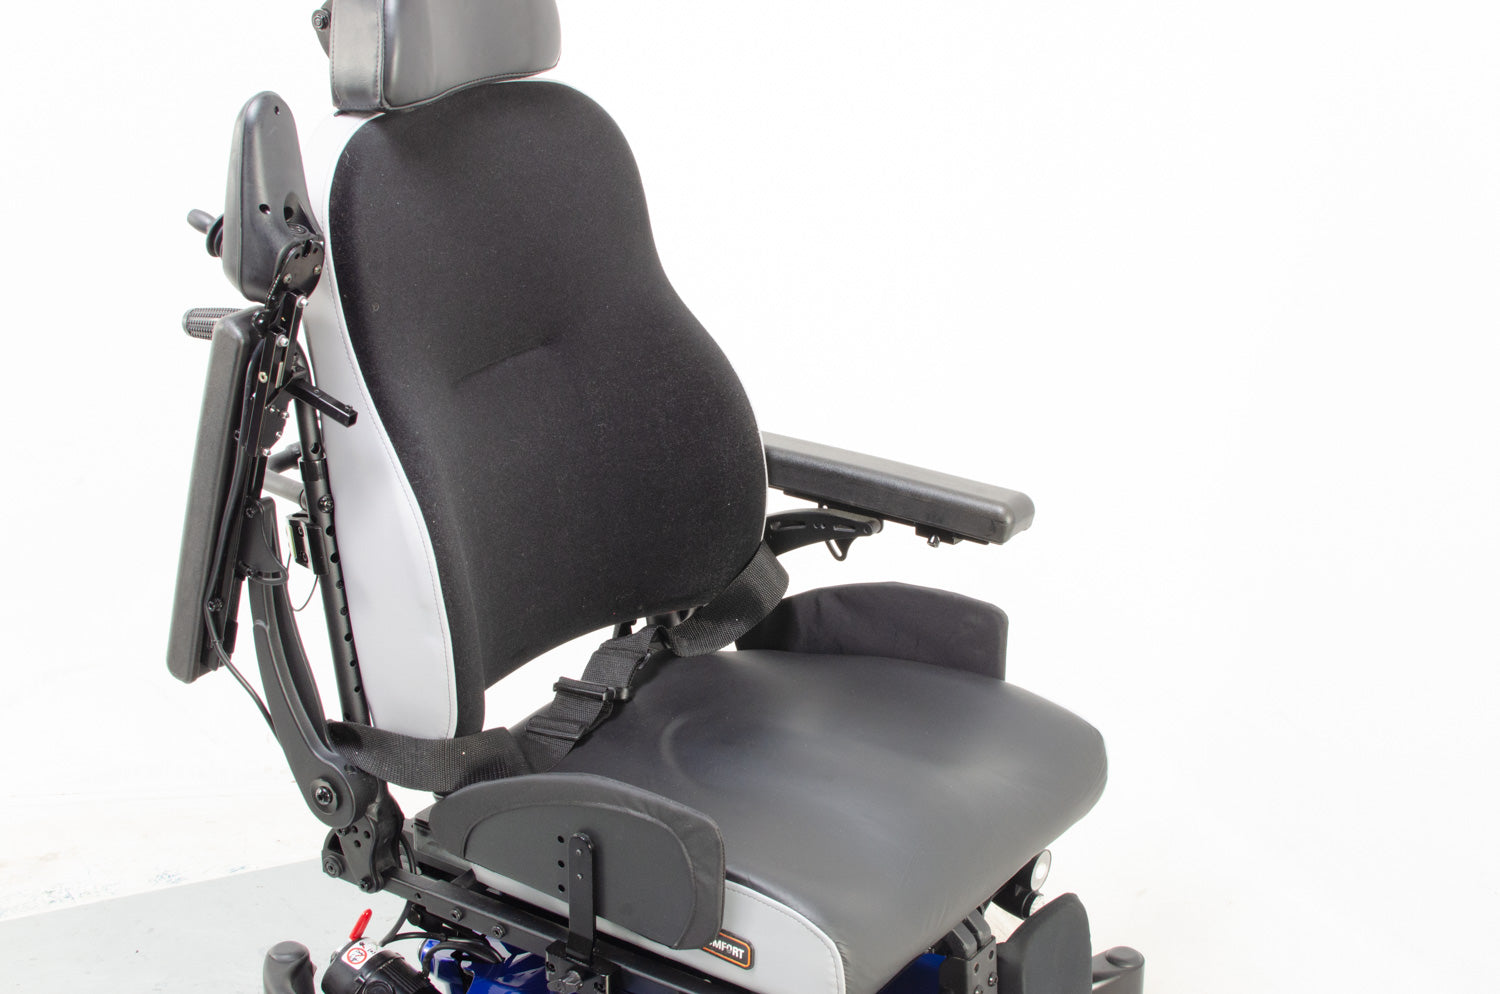 2017 Quickie Salsa M2 6mph Powered Wheelchair Electric Tilt Sunrise Medical Powerchair in Blue